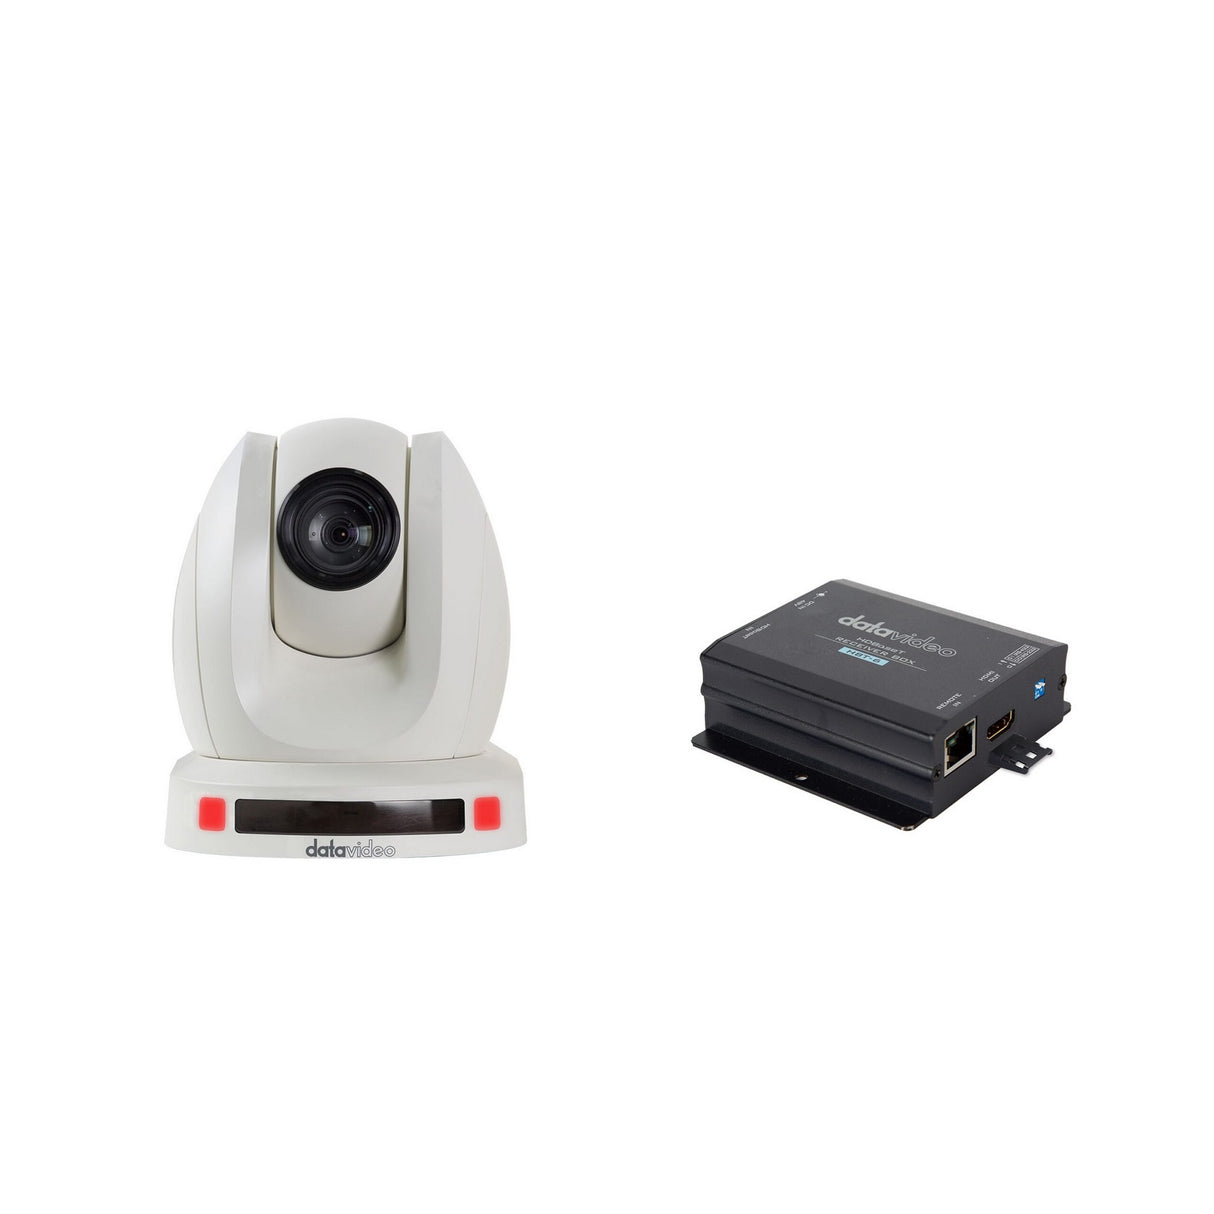 Datavideo PTC-140TW-6 HDBaseT PTZ Camera with HBT-6 Receiver, White